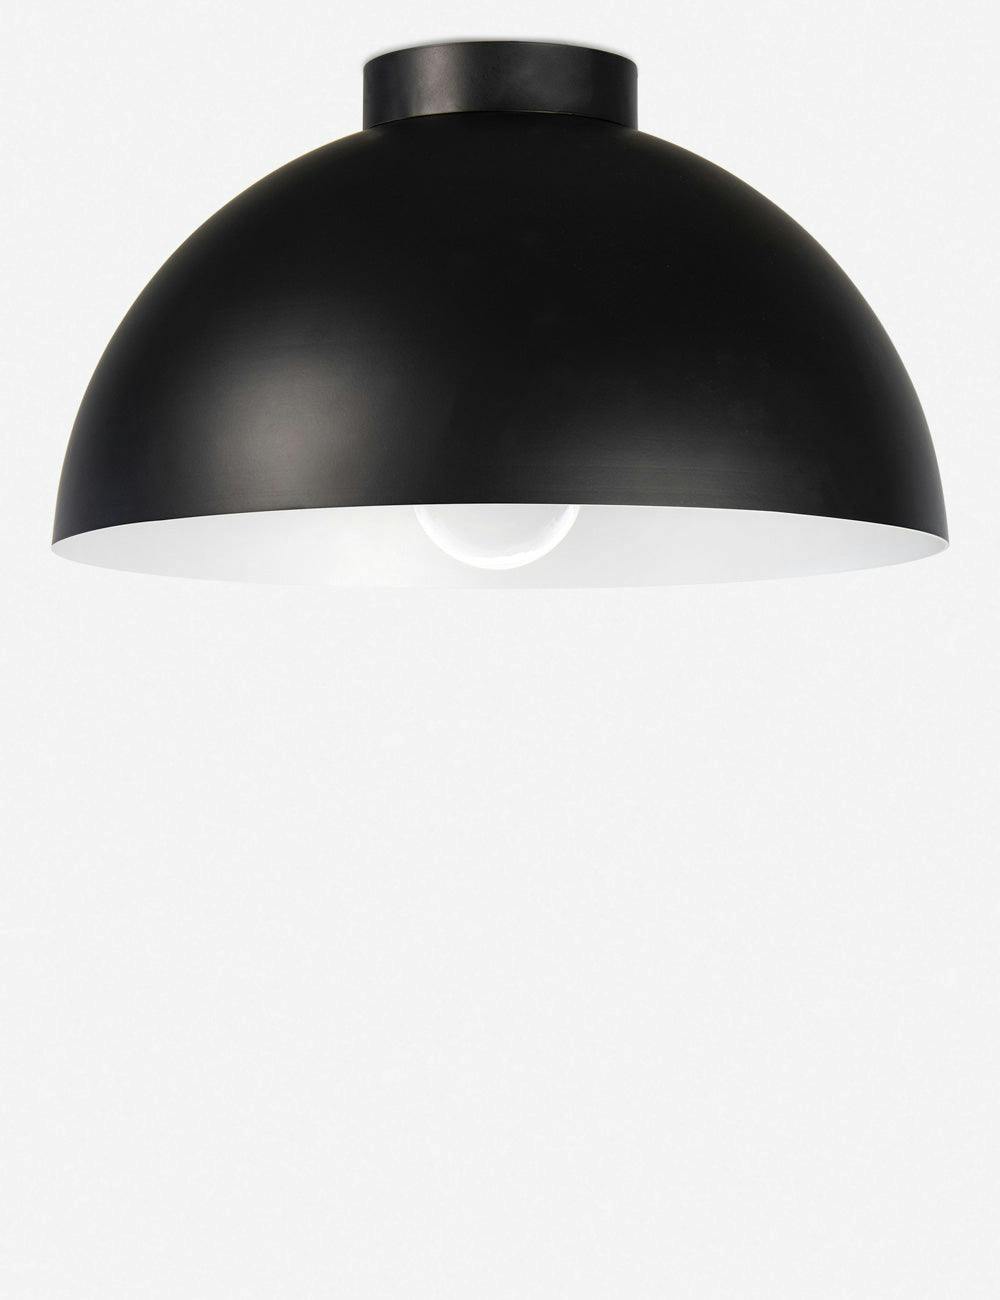 Minimalist Black Aluminum Outdoor Bowl Flush Mount Light